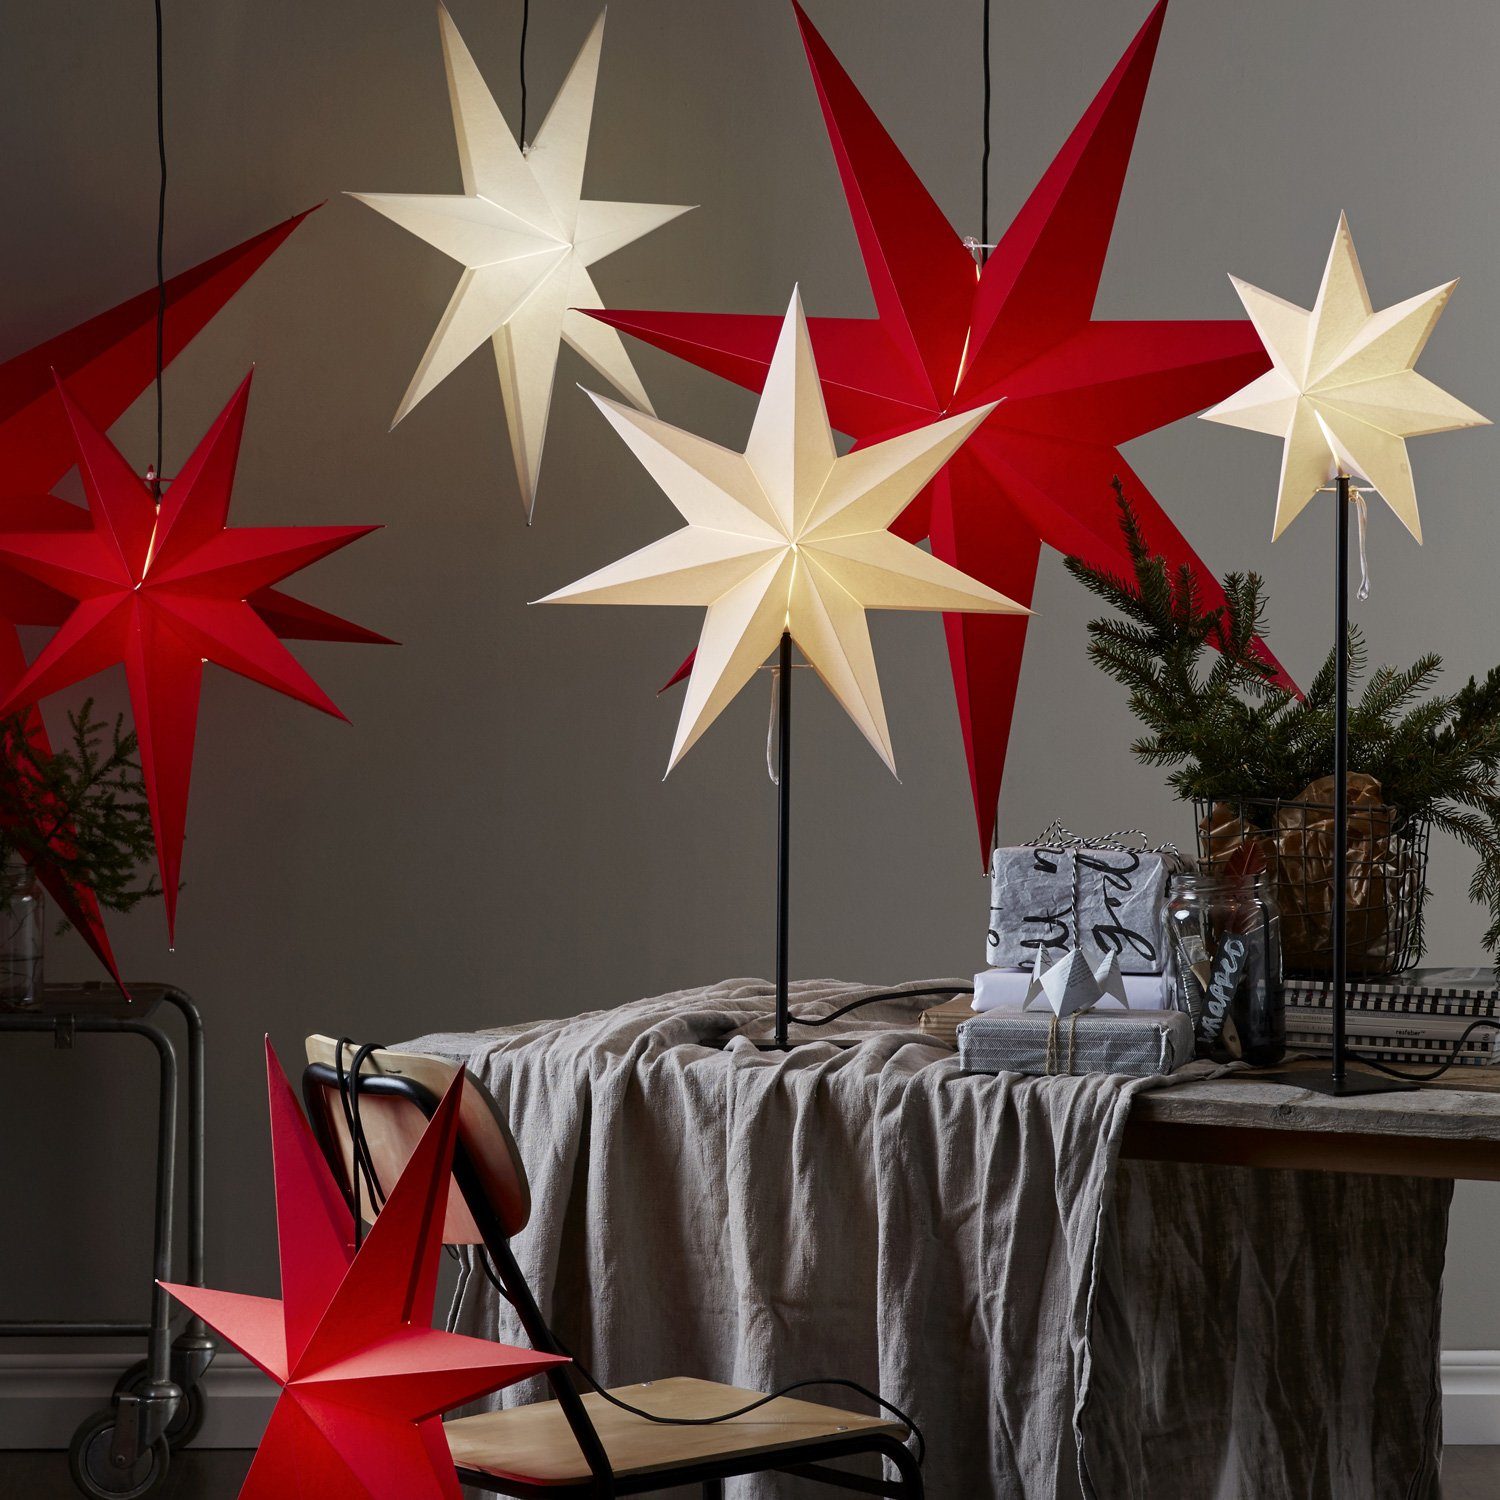 rot Papierstern STAR LED 7-zackig Faltstern 55cm mit hängend TRADING Stern Kabel Leuchtstern